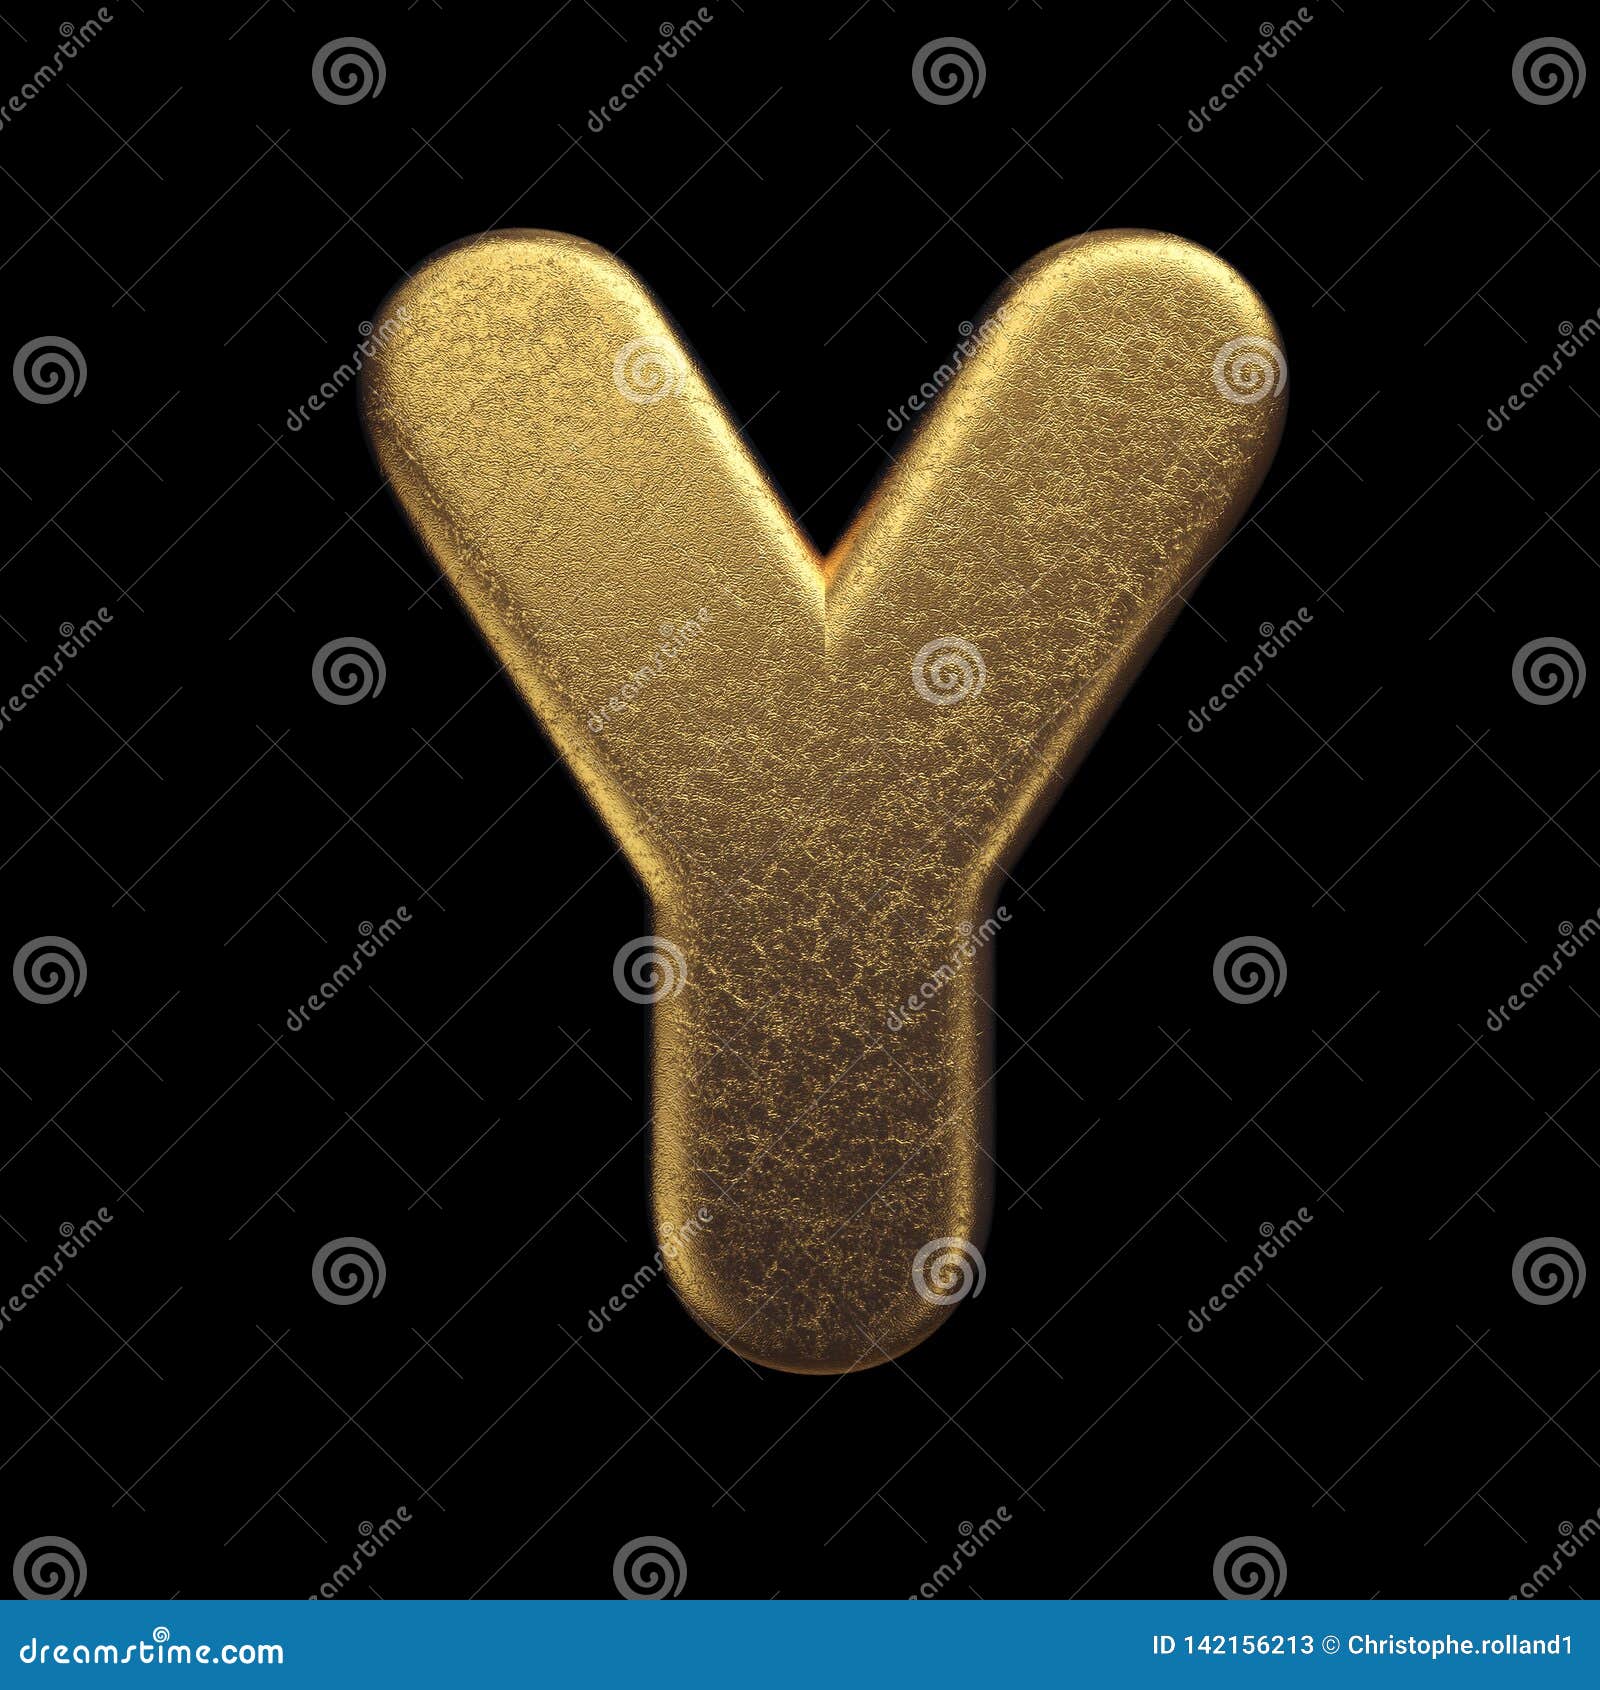 Gold Letter Y - Capital 3d Precious Metal Font - Suitable for Fortune ...